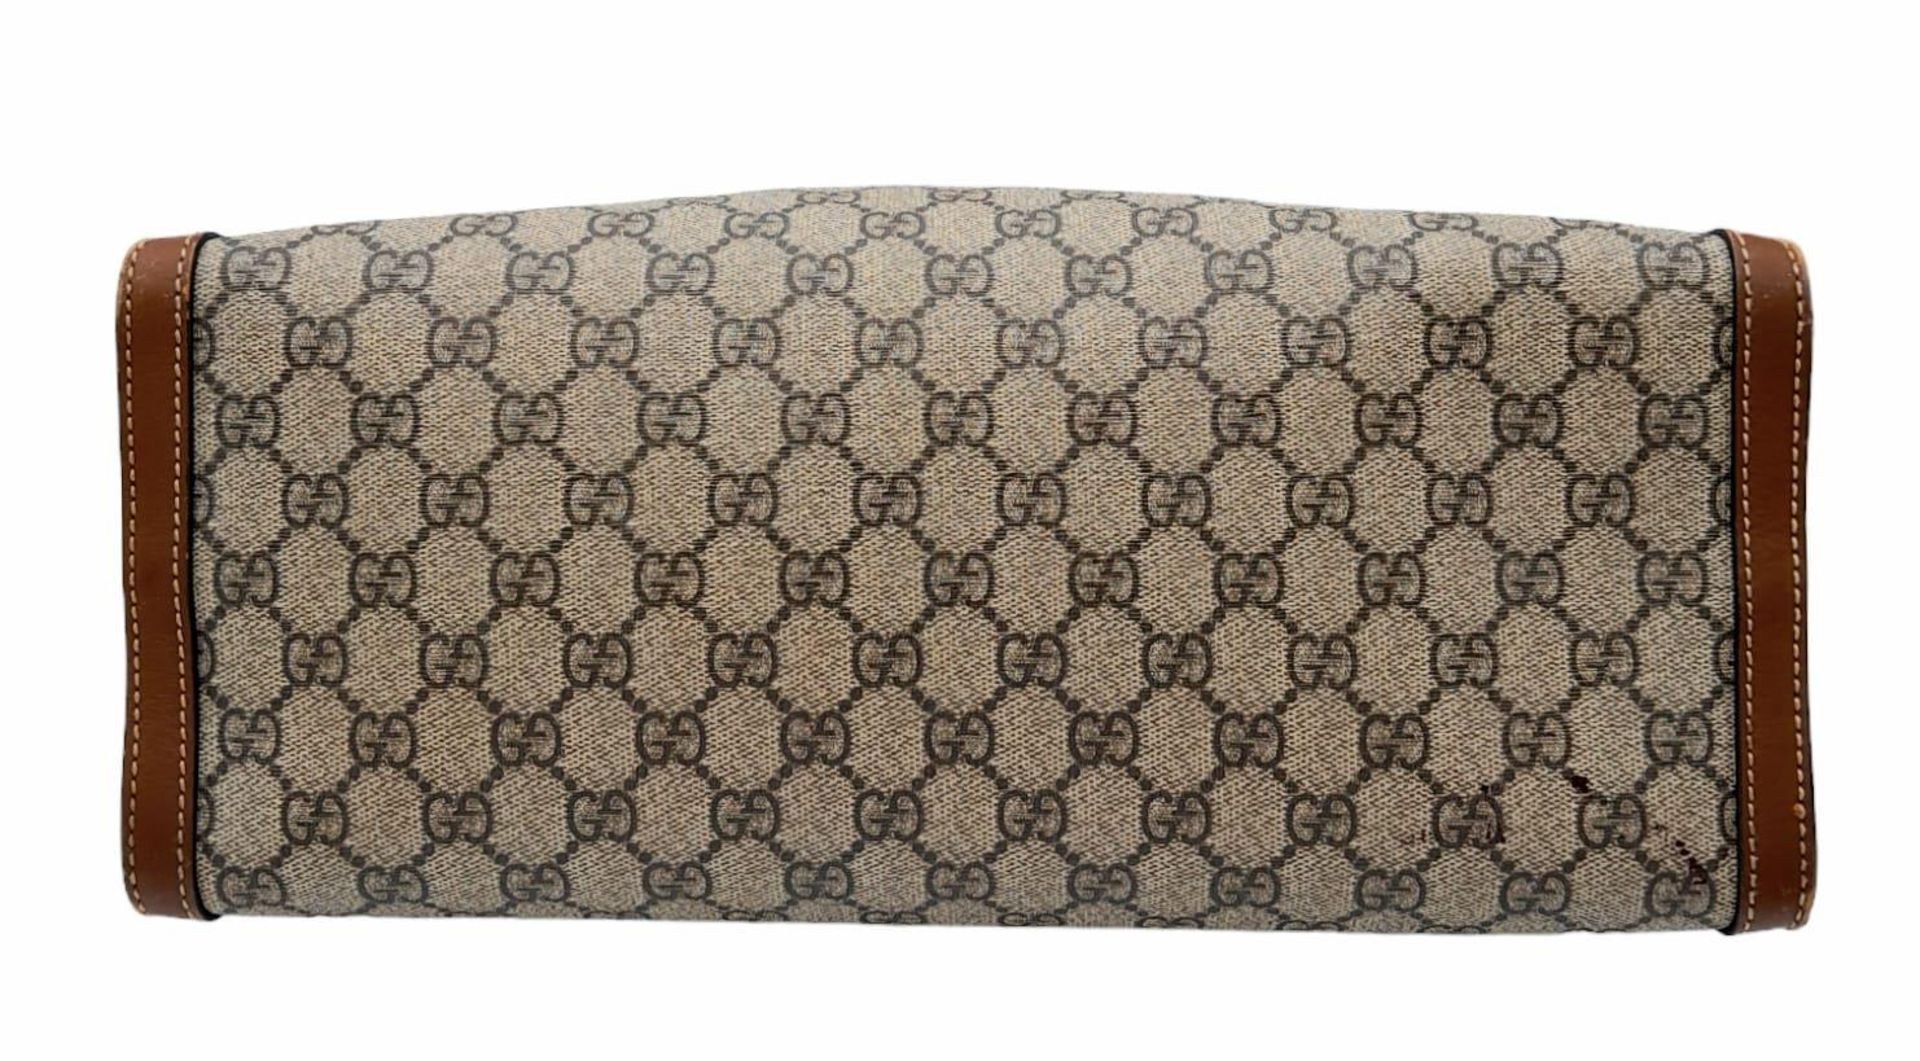 A Gucci GG padlock medium shoulder bag, gold tone hardware, brown suede leather interior. Size - Image 4 of 11